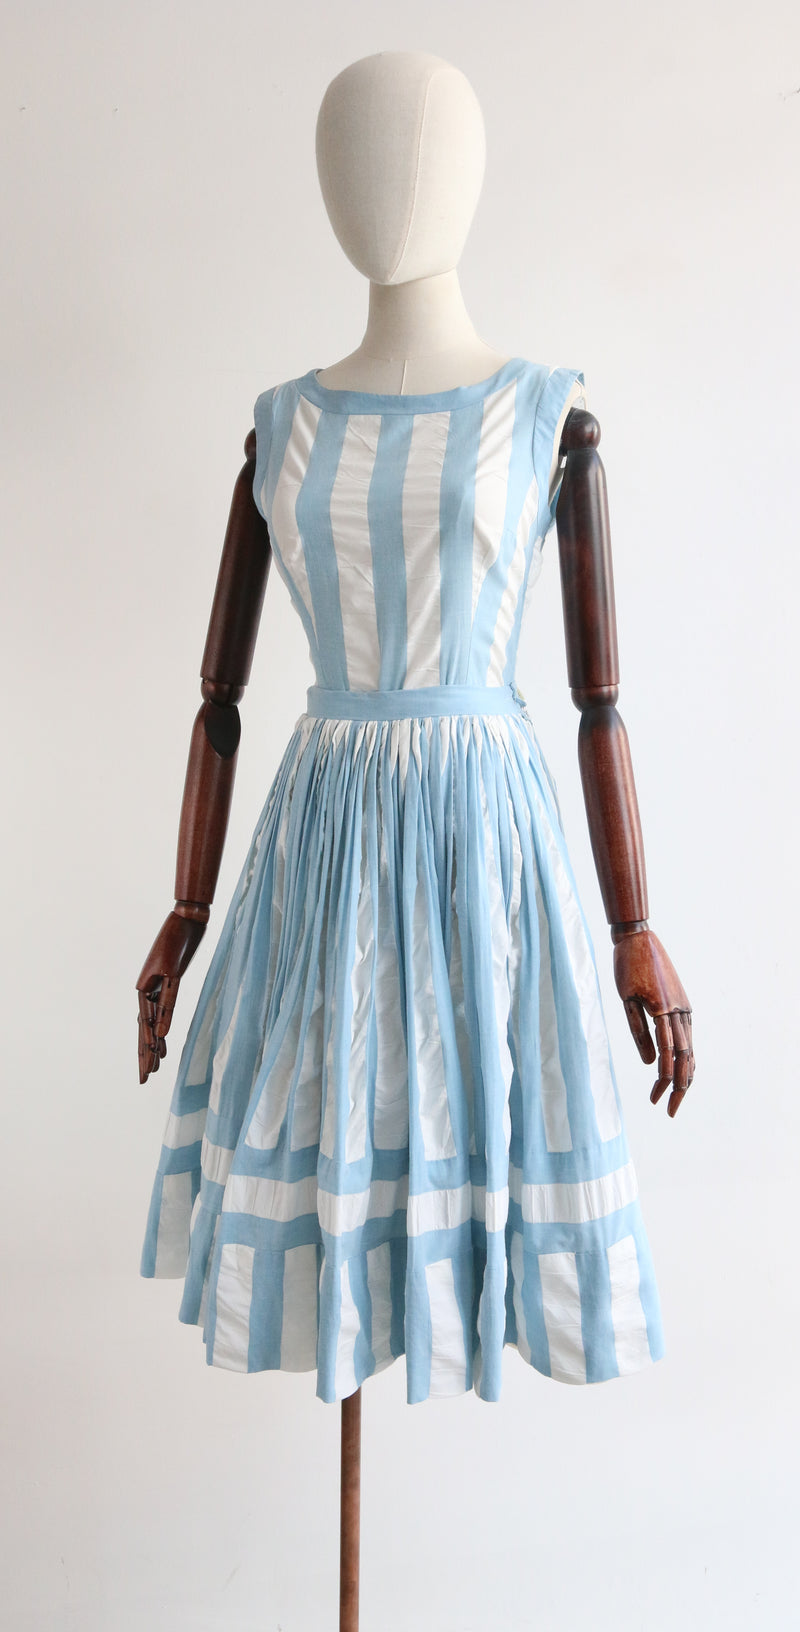 "Gathered Pleats" Vintage 1950's Blue & White Pinstriped Skirt & Blouse Set UK 6-8 US 2-4